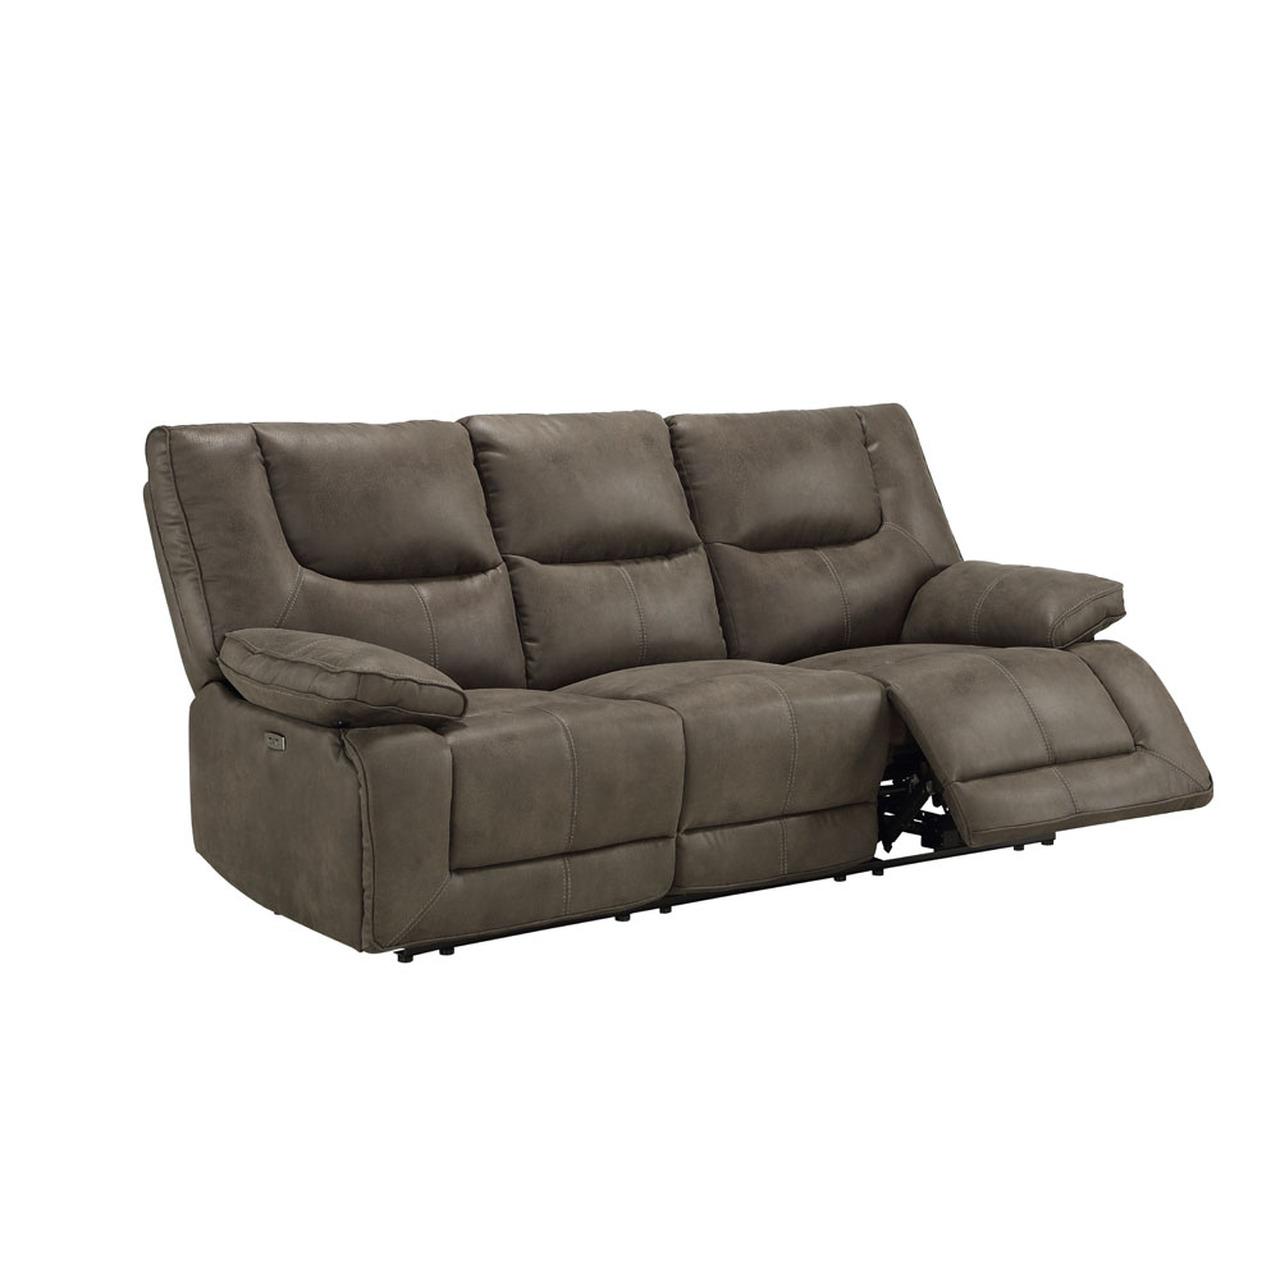 

    
Contemporary Dark Gray Leather Power Sofa by Acme Harumi 54895
